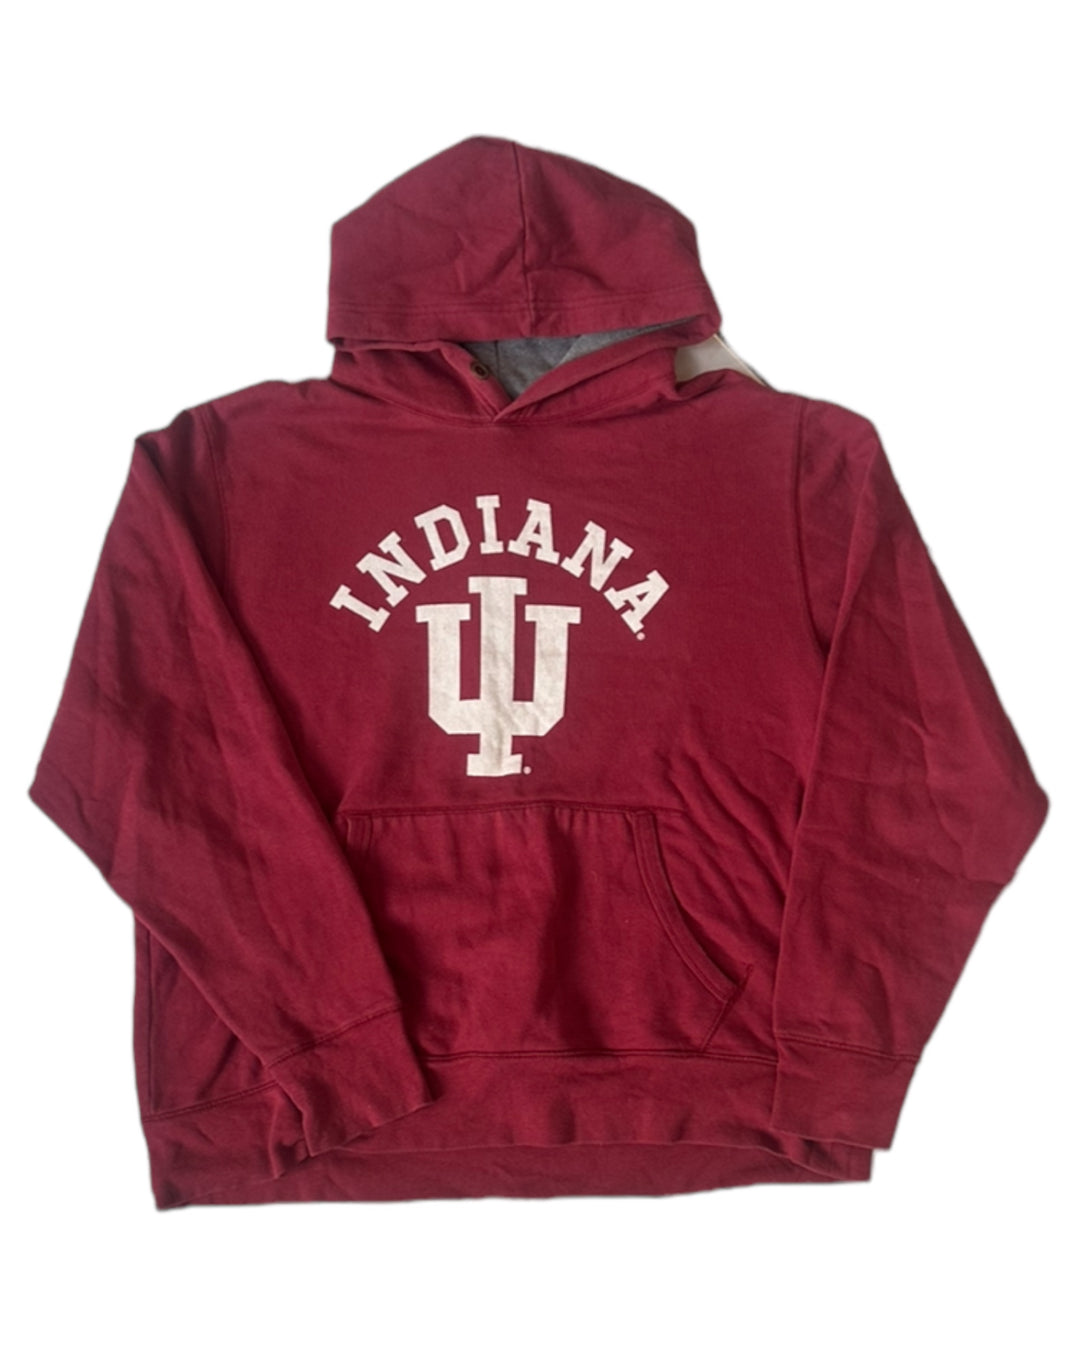 Indiana Vintage Sweatshirt